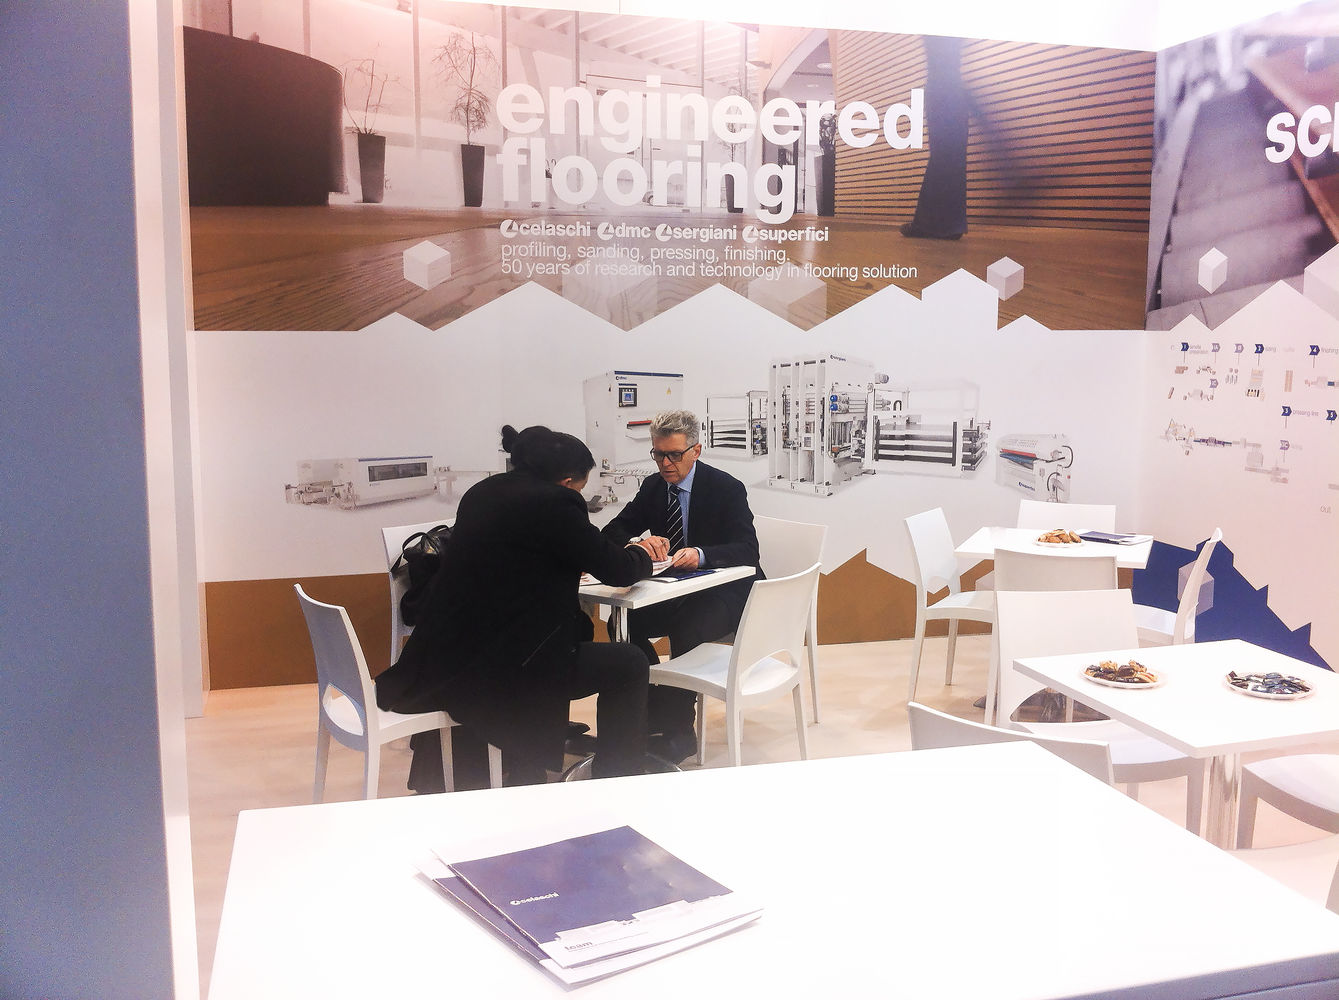 The international flooring industry is meeting in Hannover!